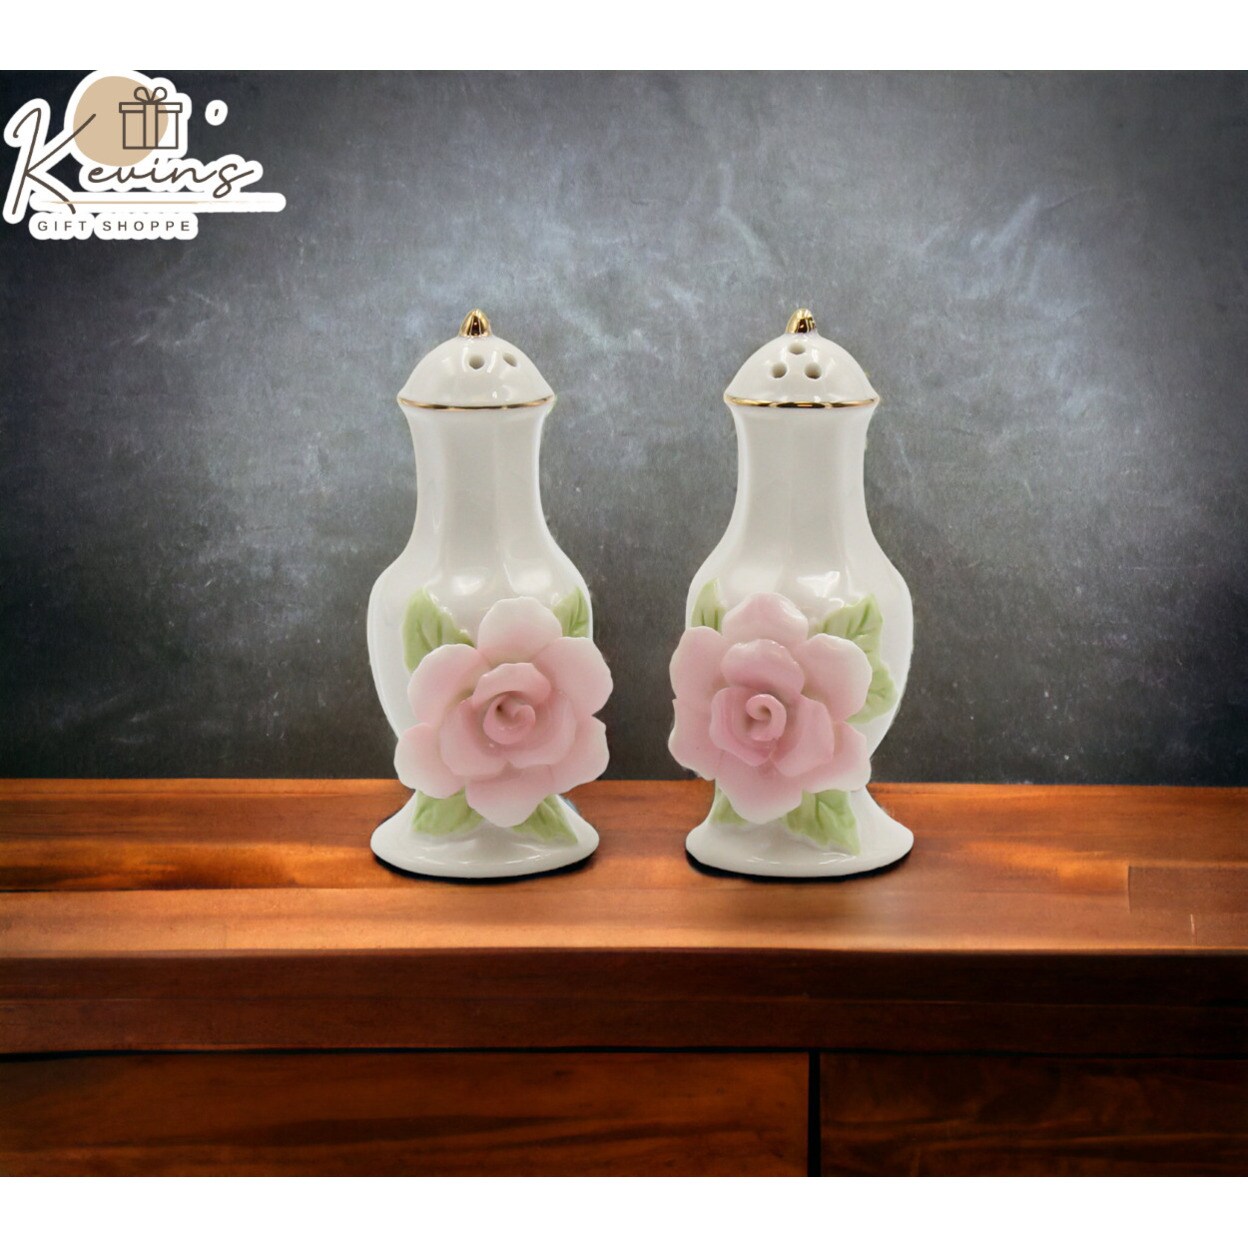 kevinsgiftshoppe Ceramic Pink Rose Jar With Gold Trim Salt And Pepper Shakers Home Decor   Kitchen Decor